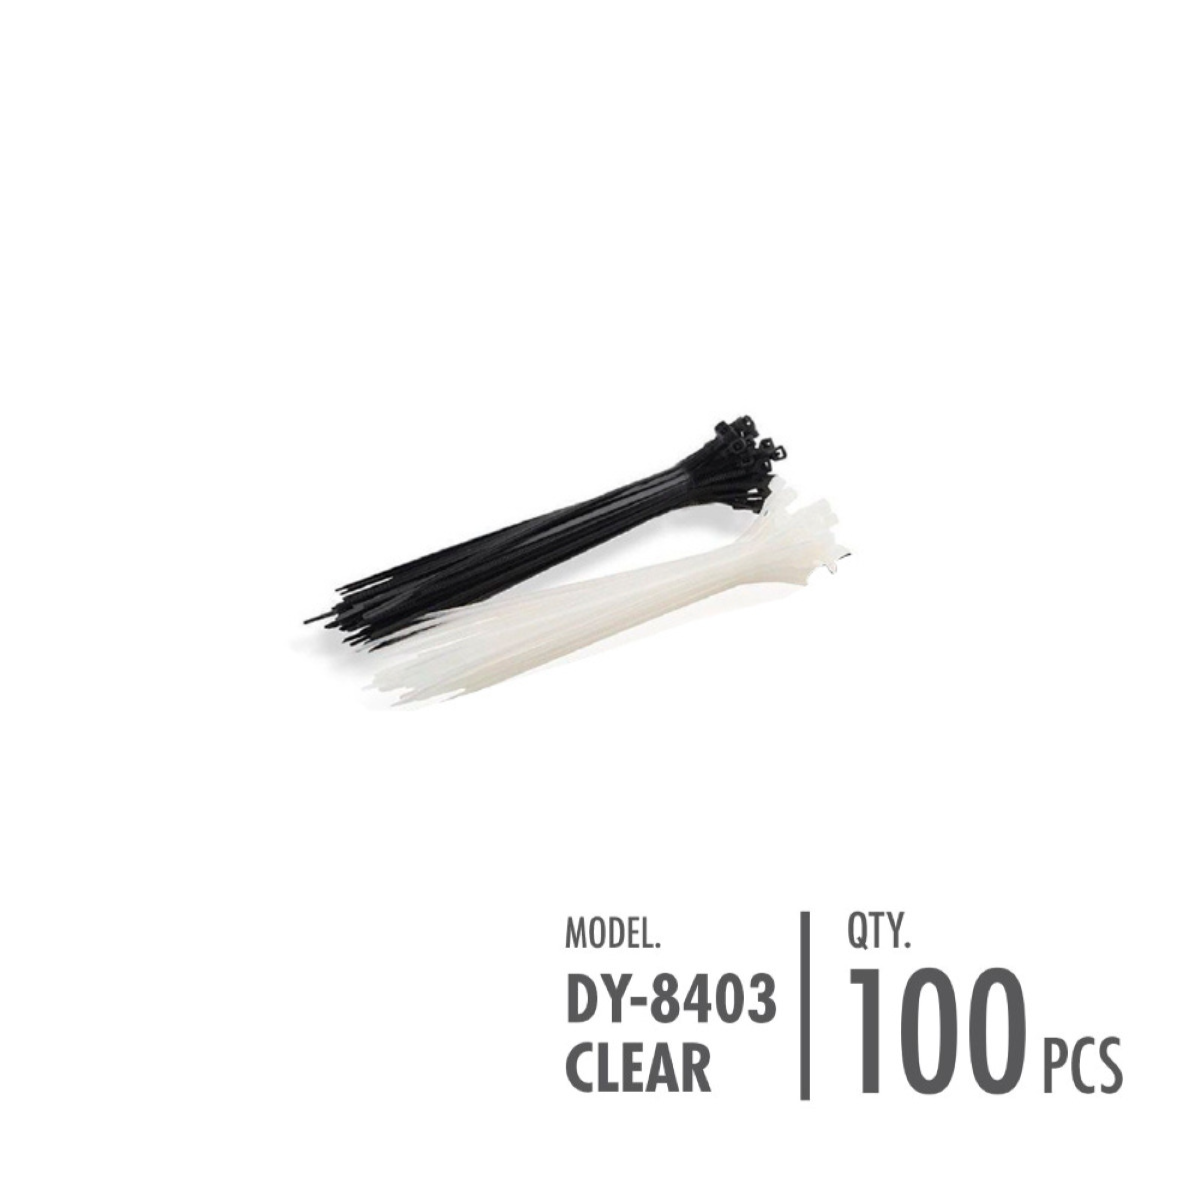 Cable Tie - Clear (Dim: 0.36 x 20cm)